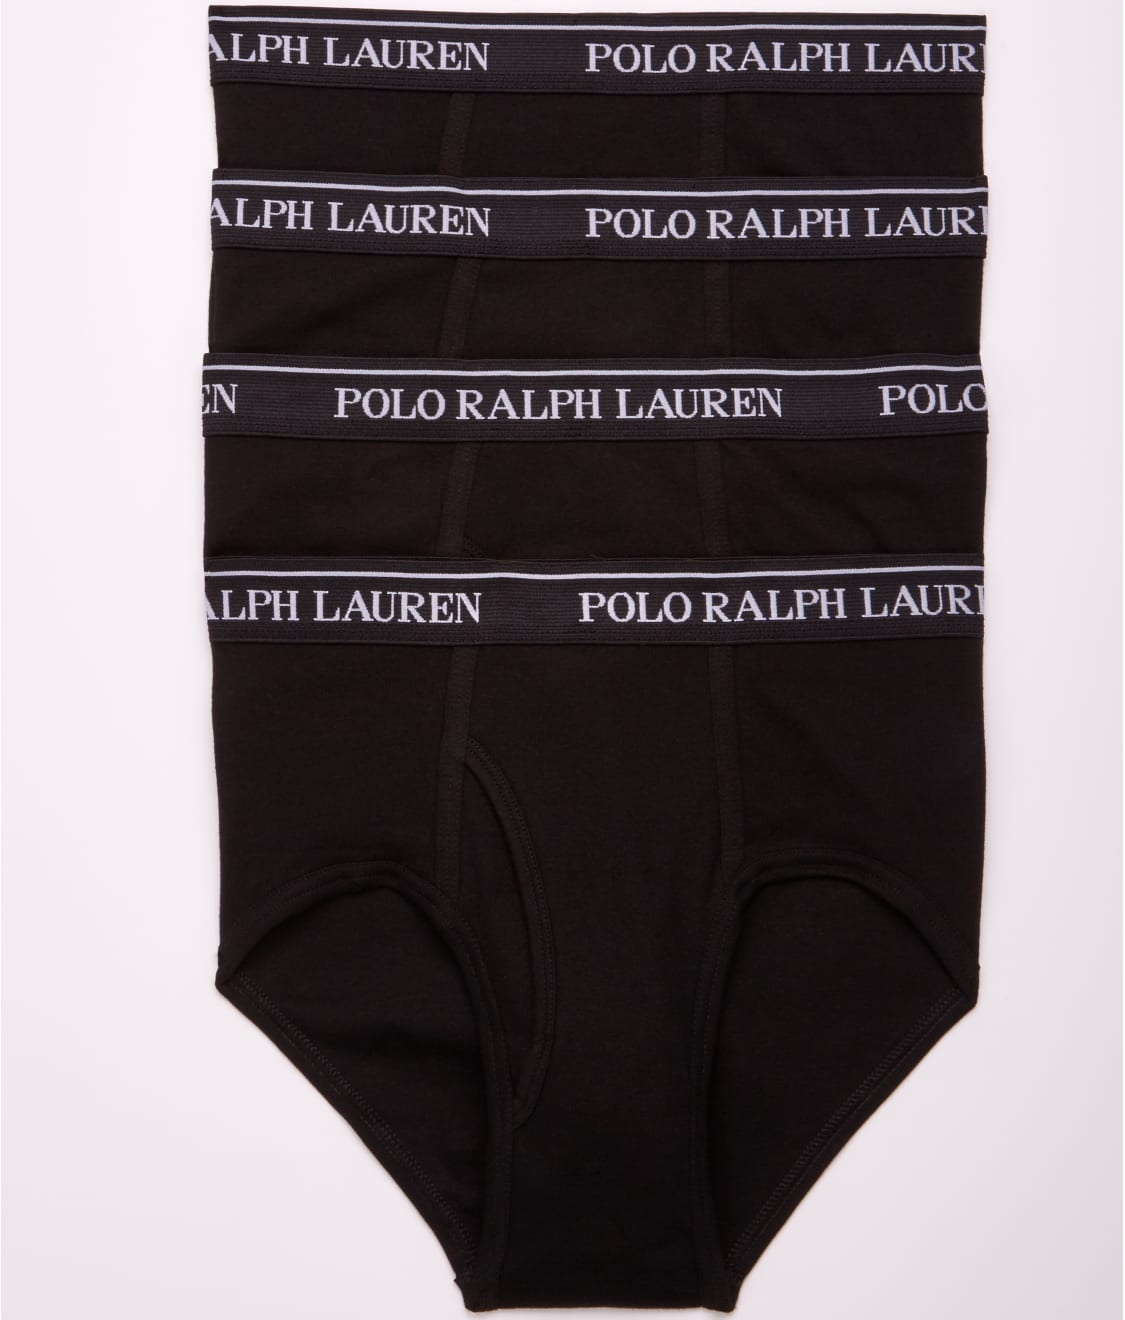 Polo Ralph Lauren Classic Fit Cotton Brief 4-Pack & Reviews | Bare ...